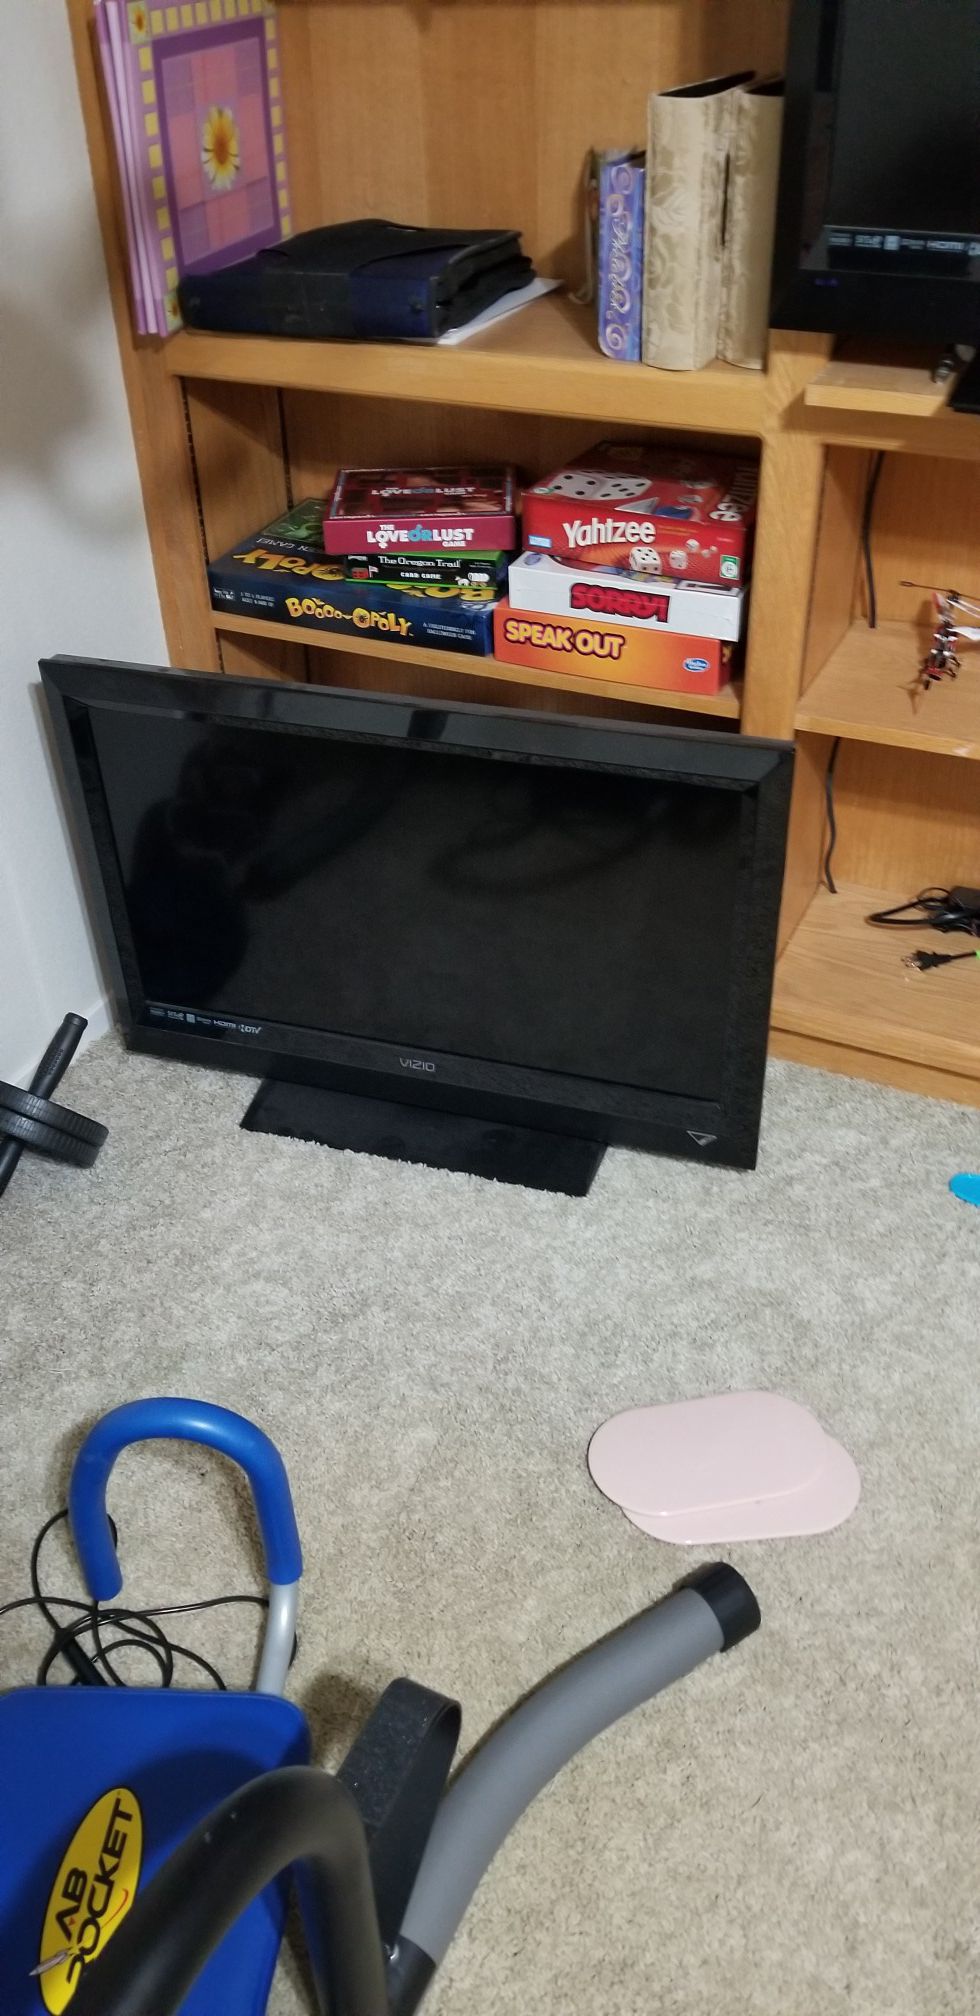 2 32 inch TVs